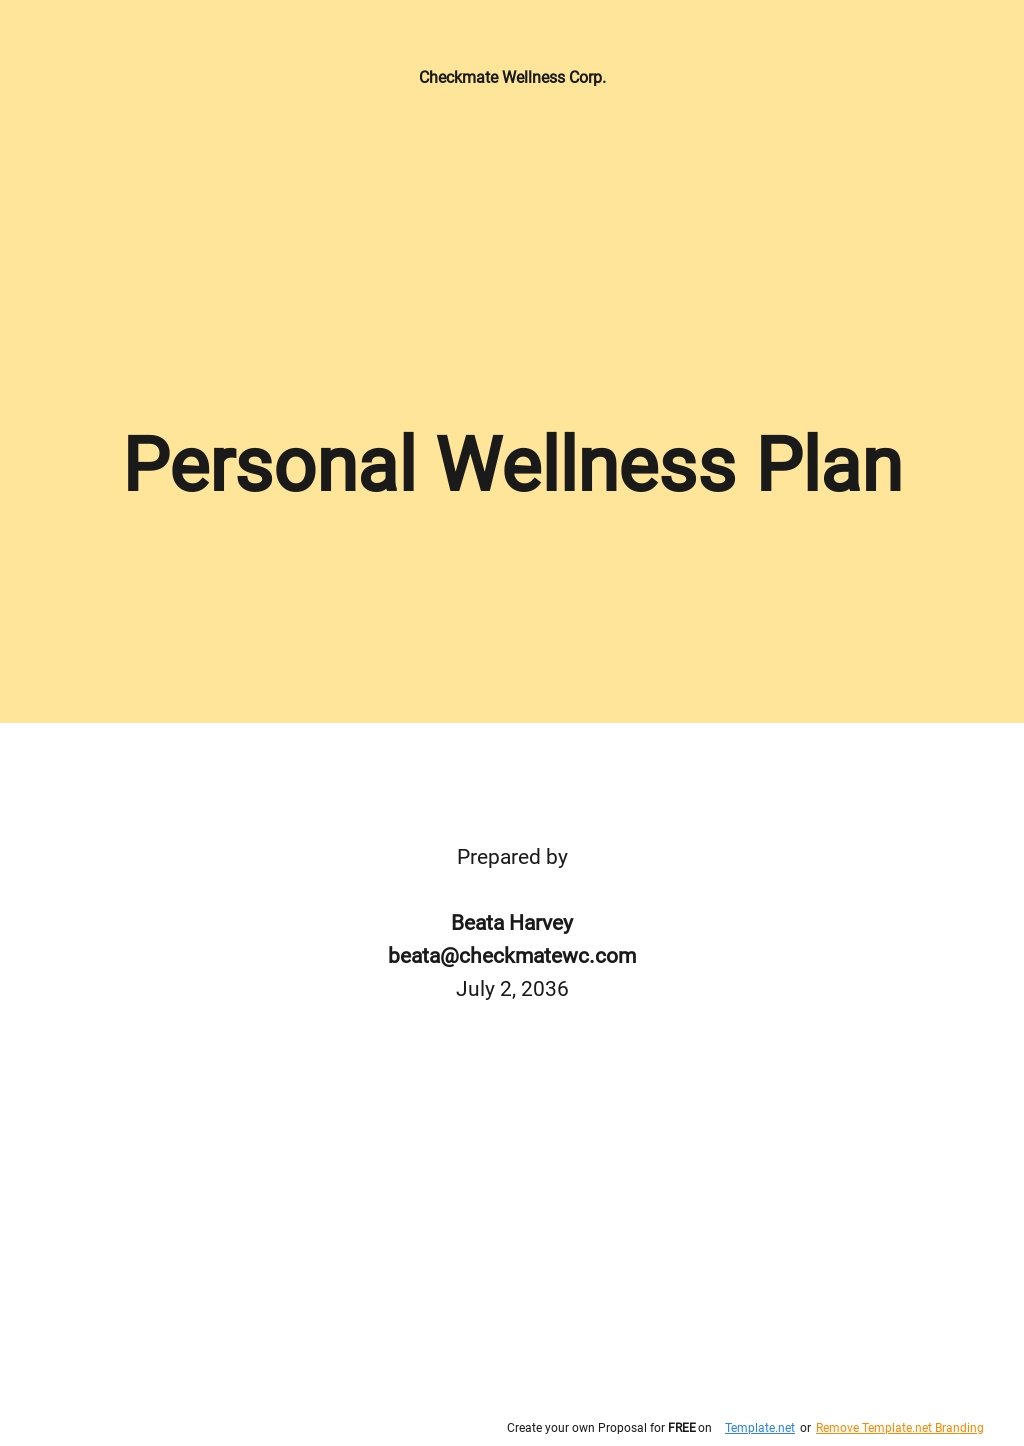 Personal Wellness Plan Template